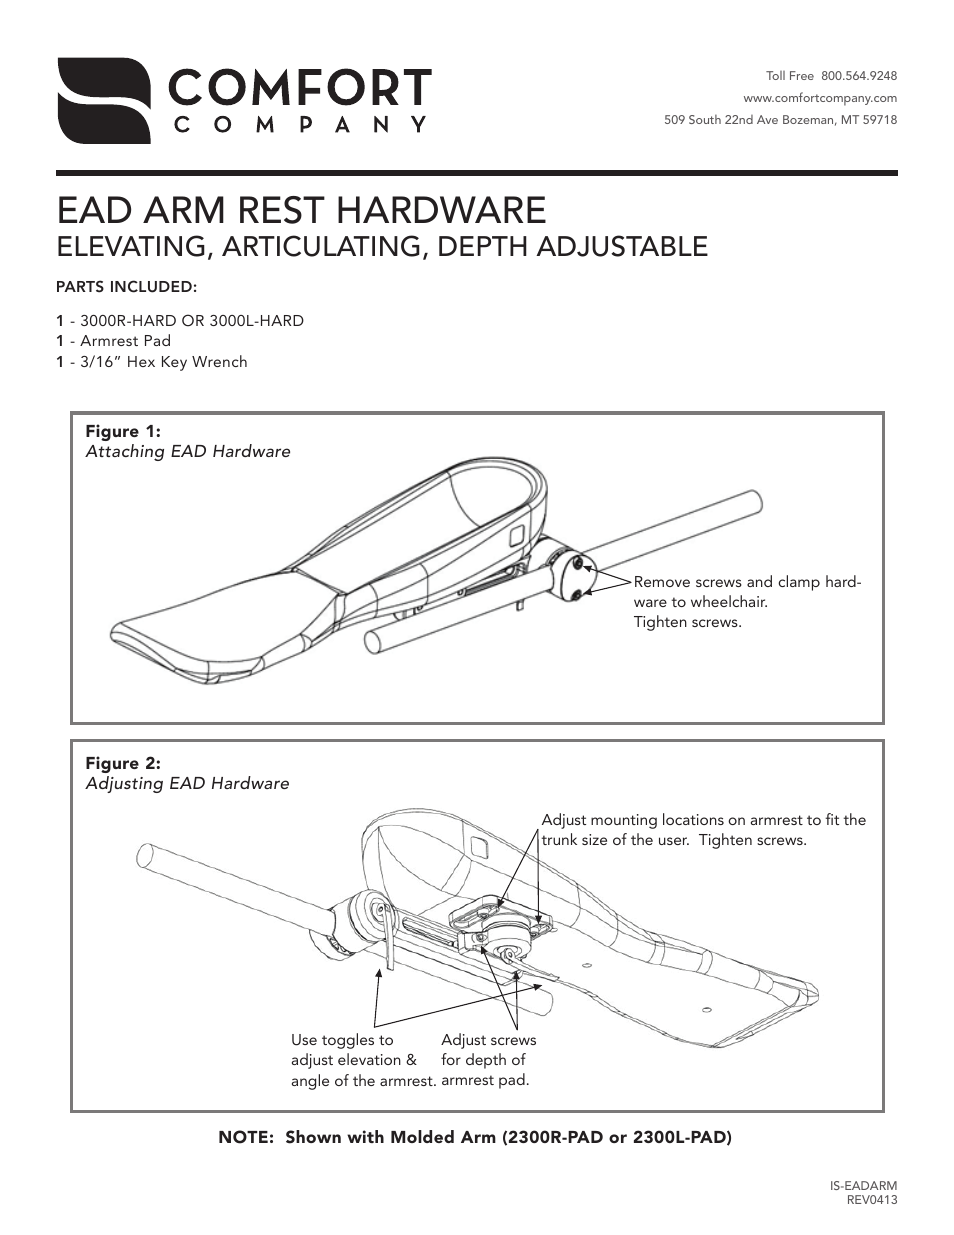 EAD Hardware